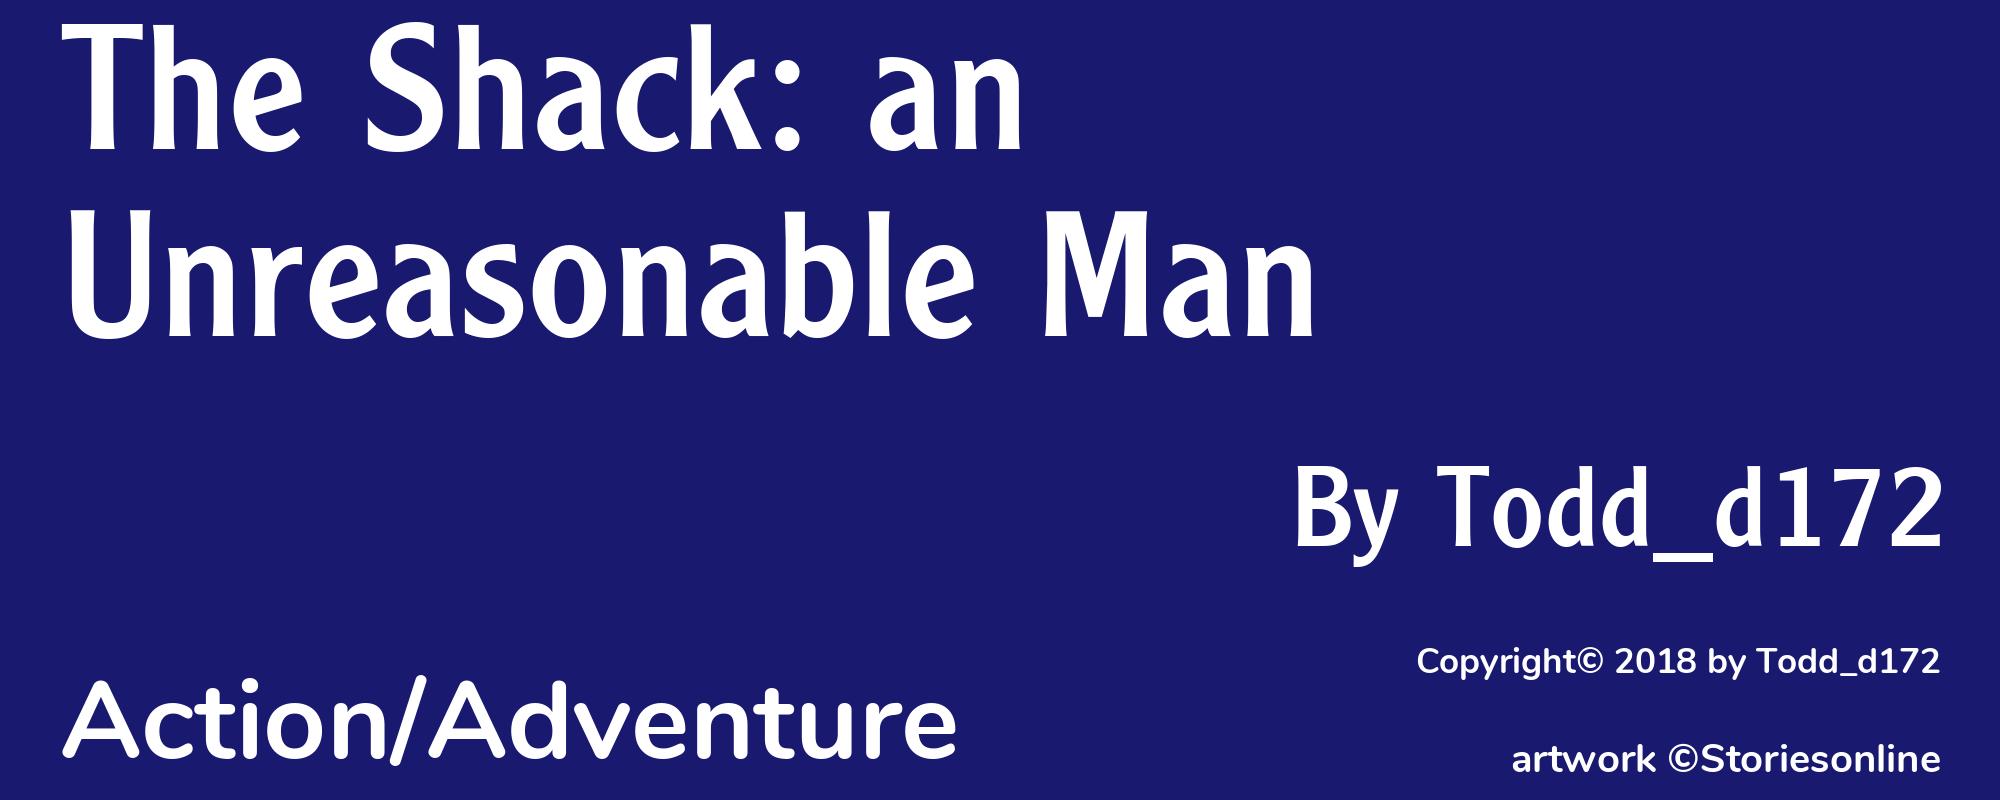 The Shack: an Unreasonable Man - Cover